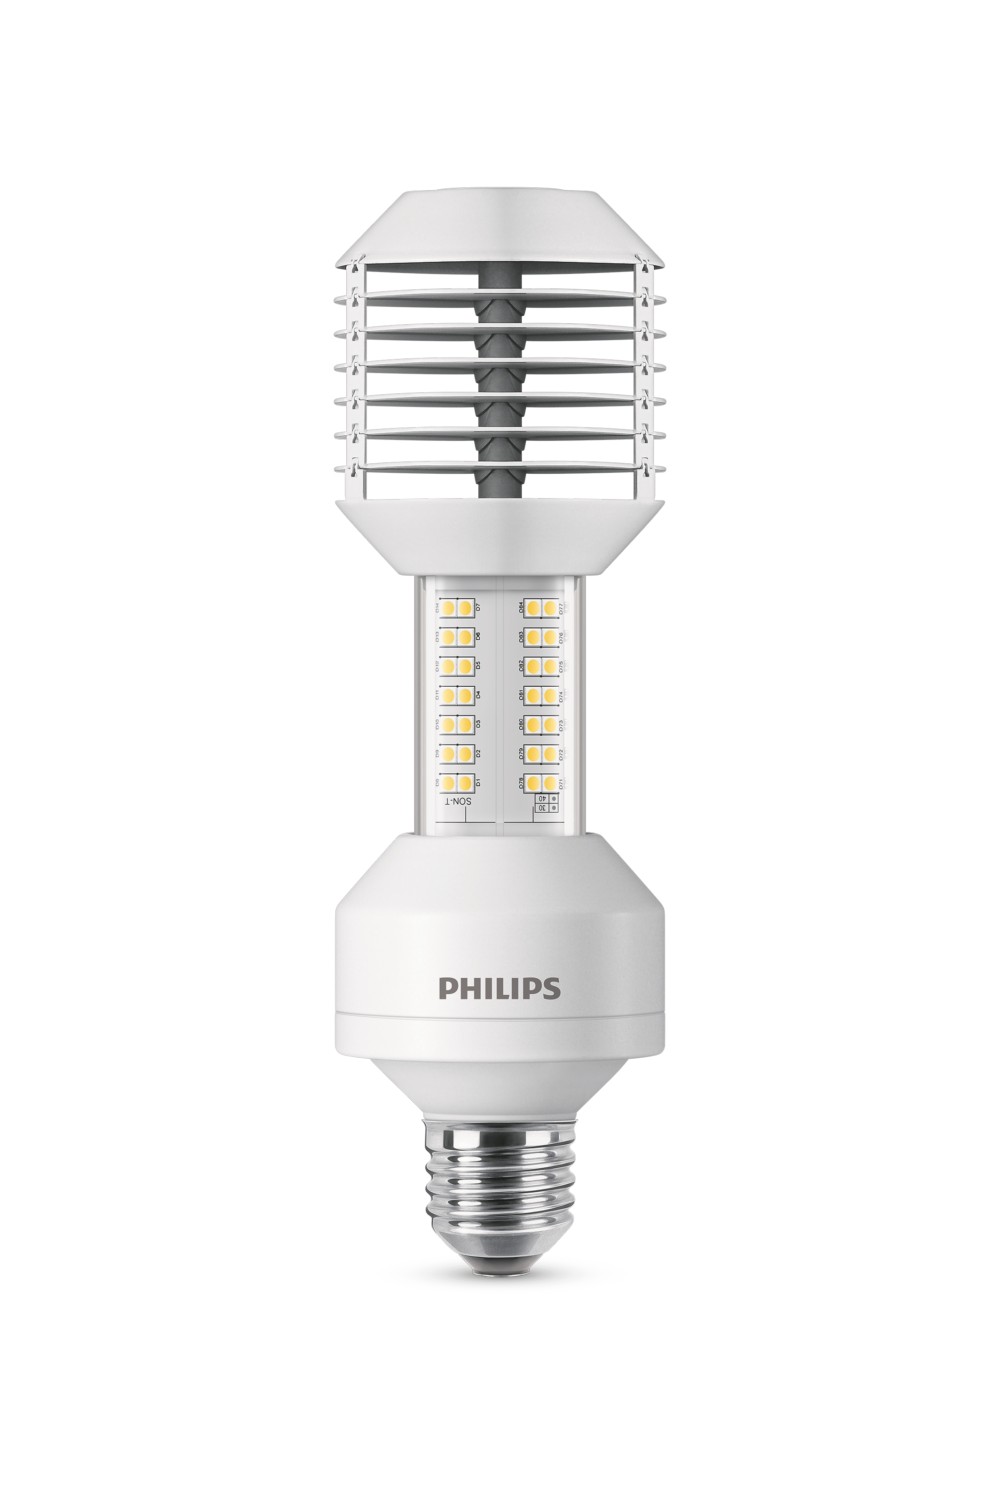 Philips LED SON-T IF 400 Lumen 23 Watt 740 E27 (50 Watt)